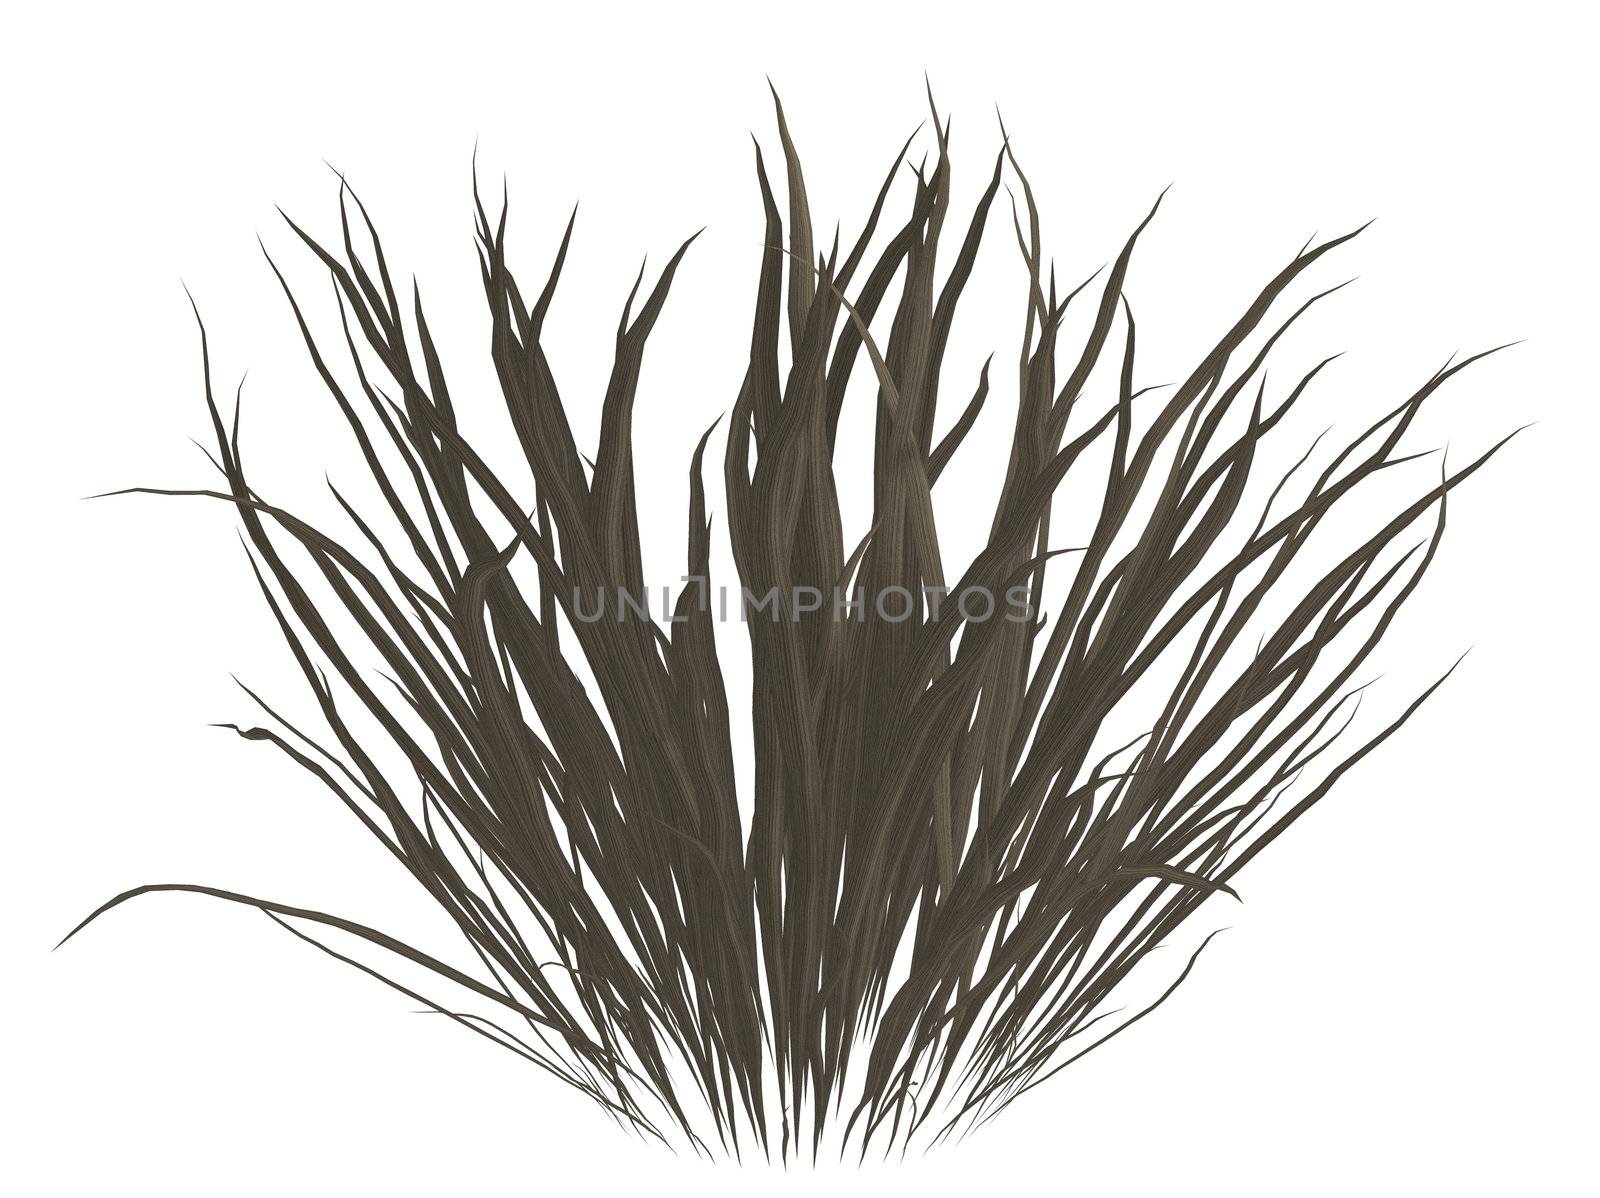 Dead Grass by kathygold